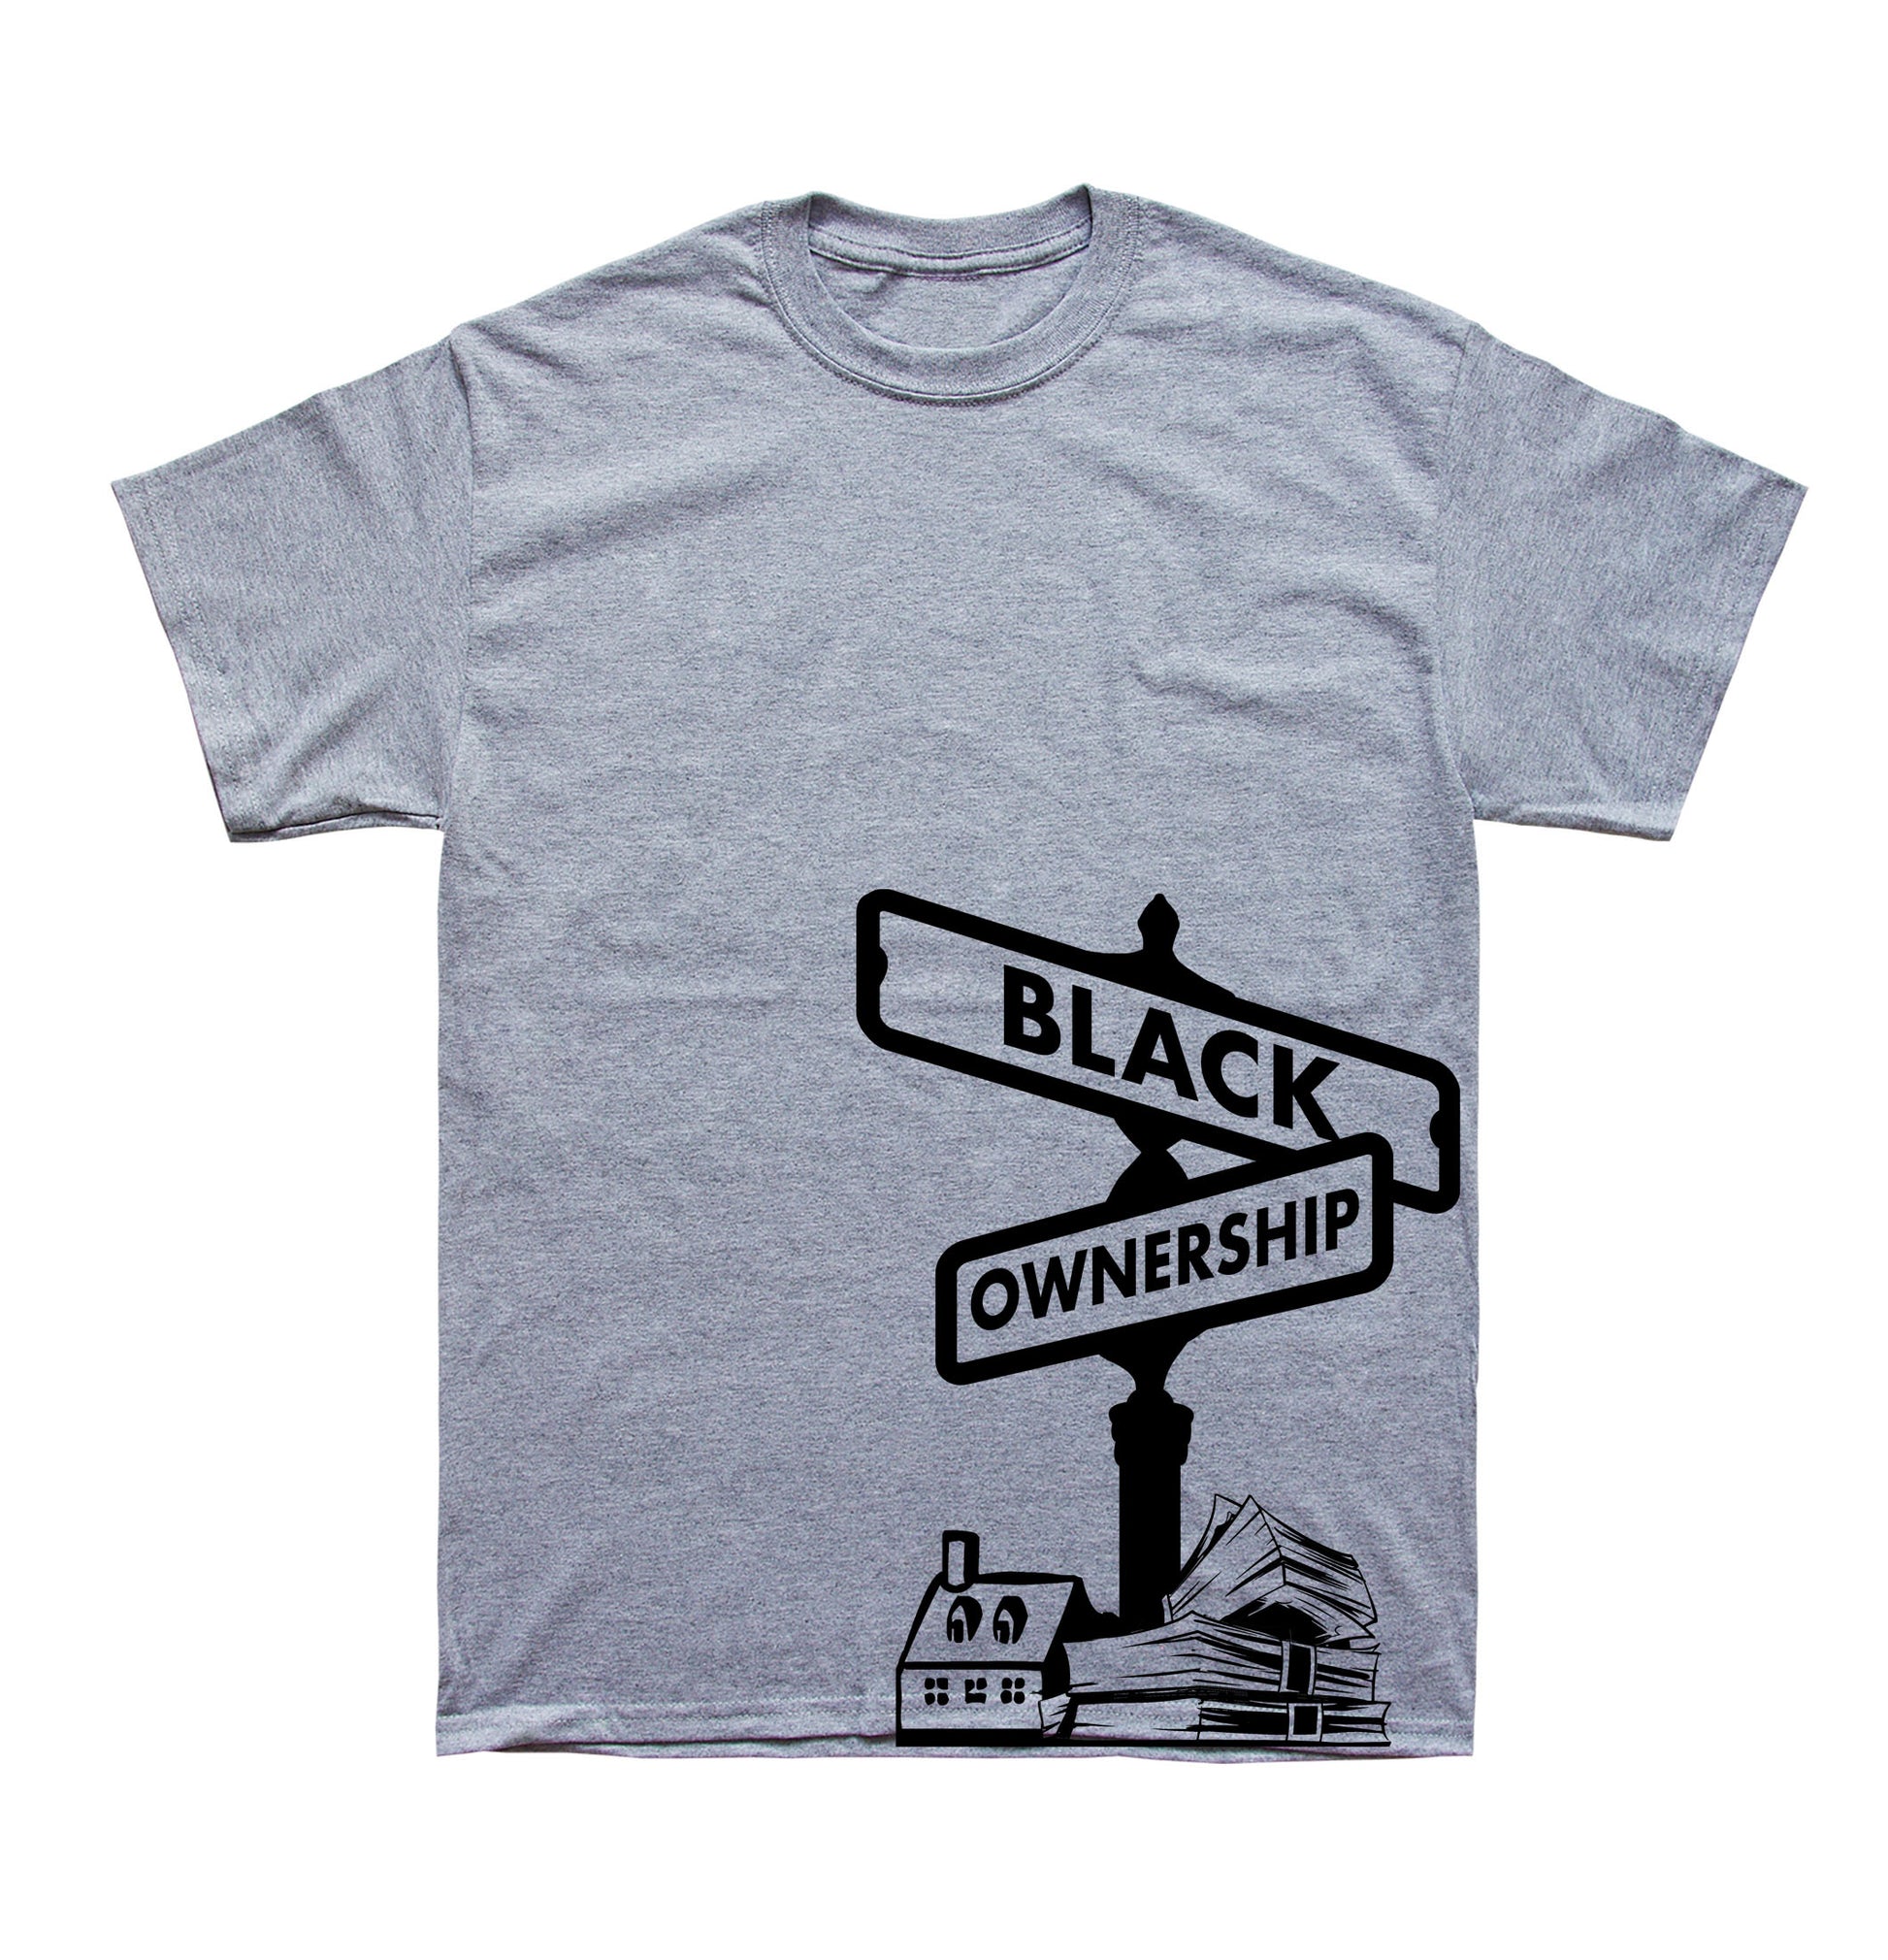 Black Ownership Shirt - Black10.com